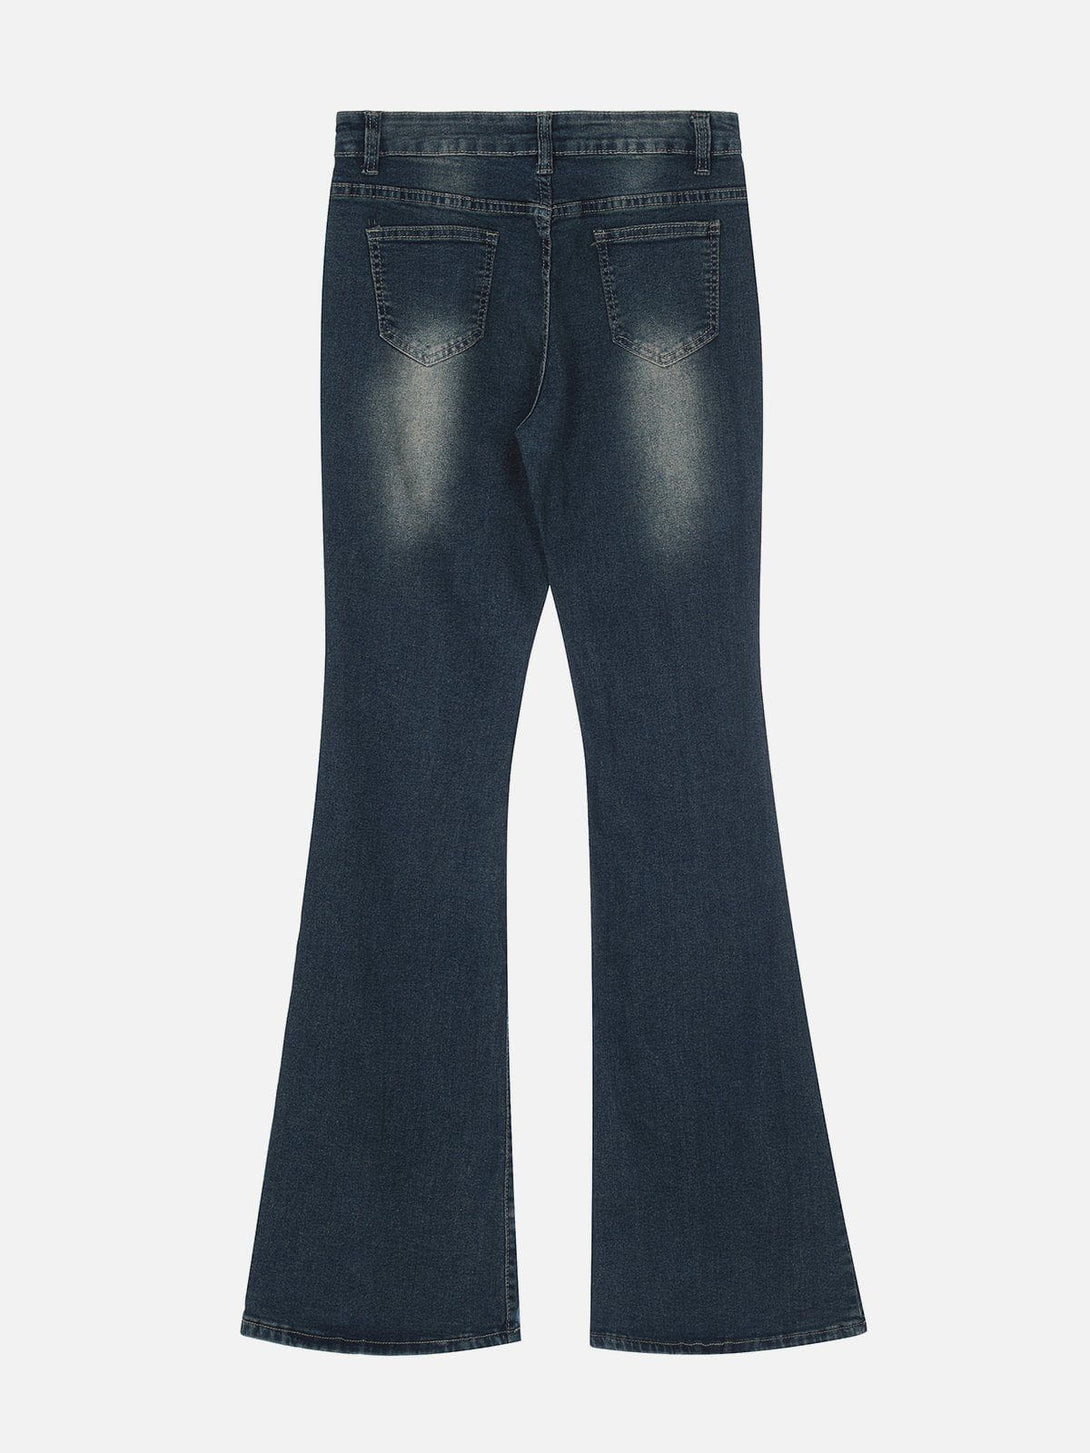 AlanBalen® - Vintage Rivets Jeans AlanBalen